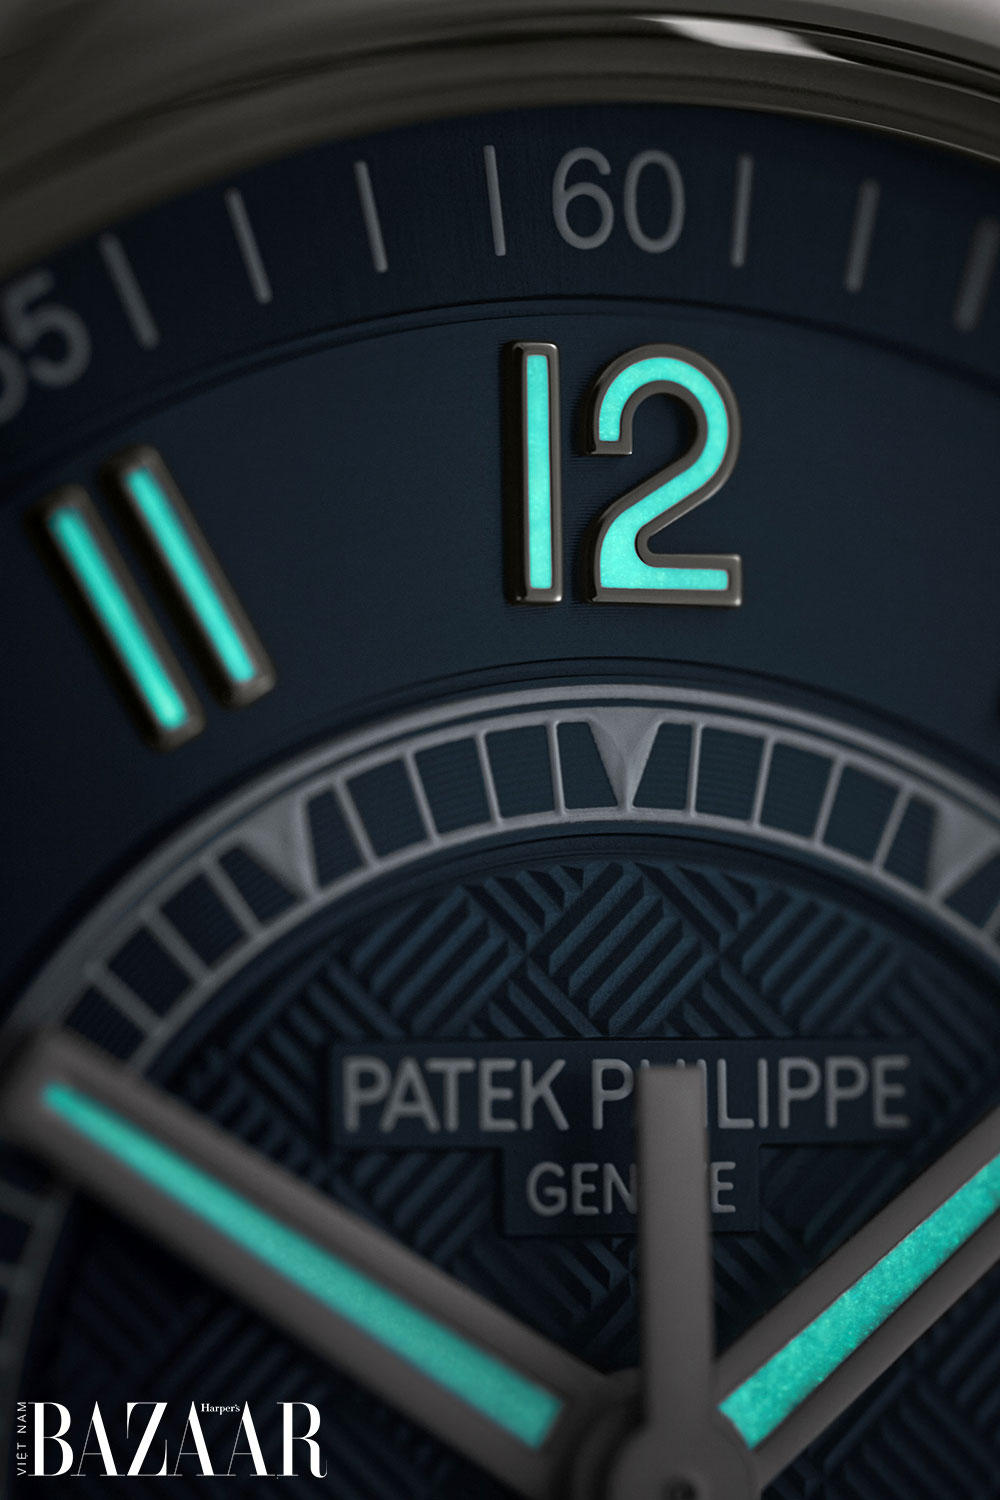 Chi tiết đồng hồ Patek Philippe Calatrava Ref 6007A-001